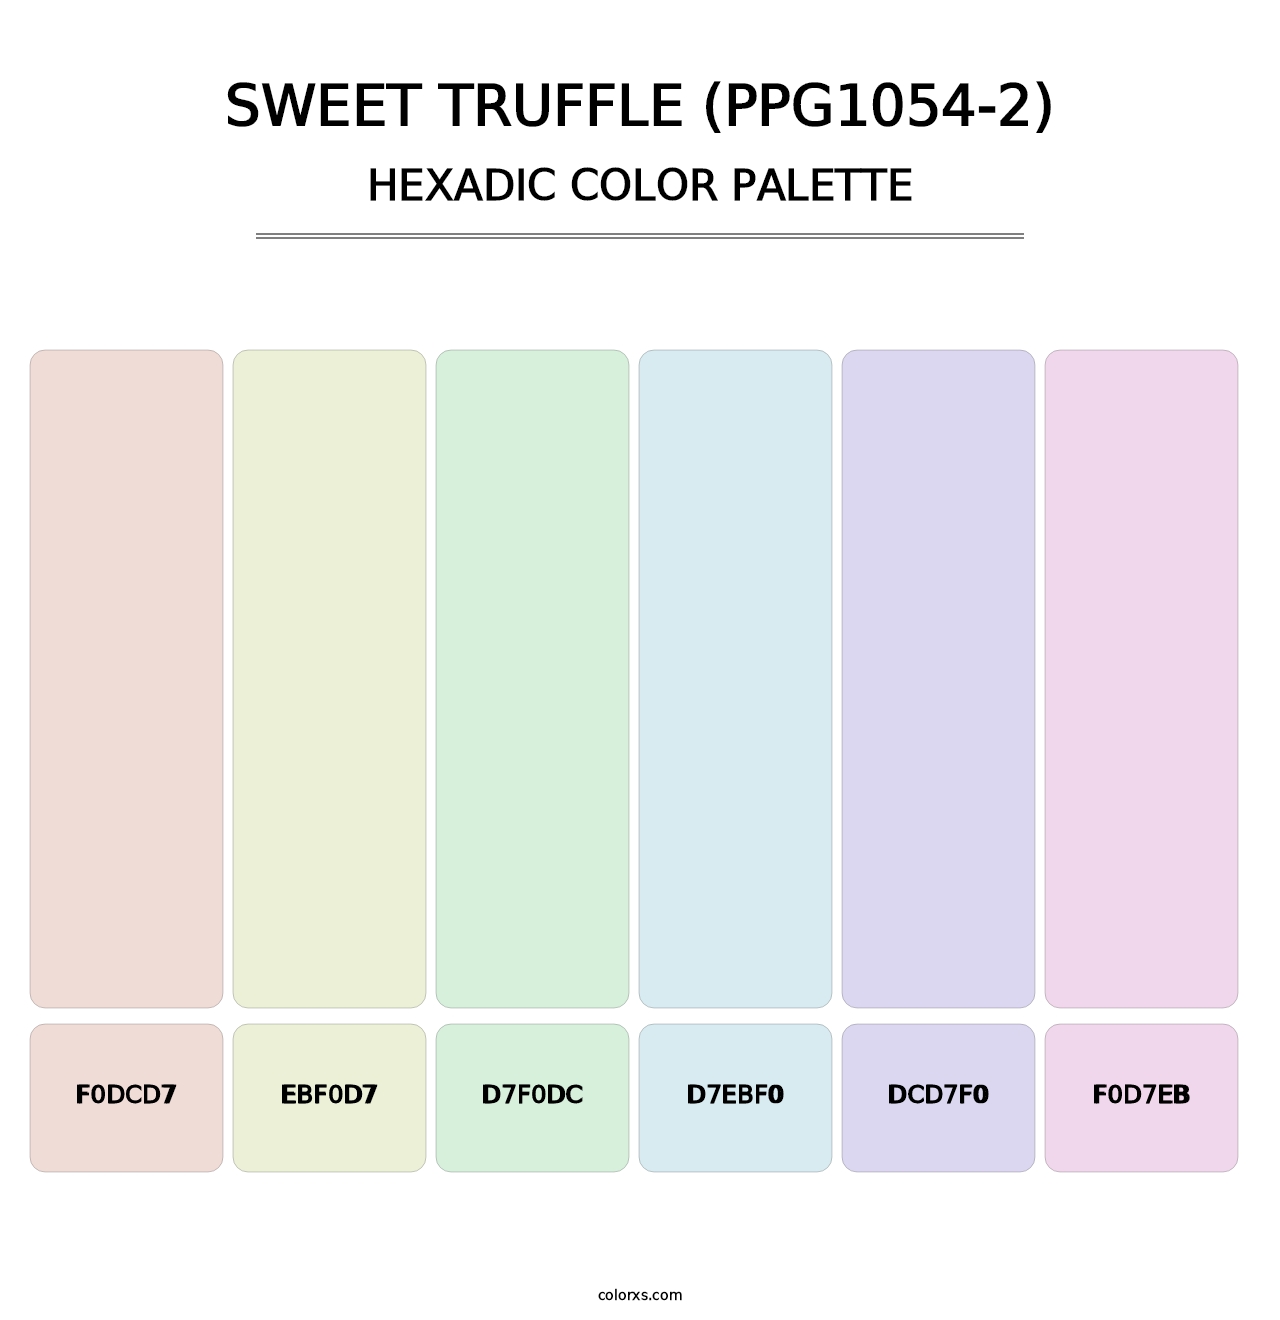 Sweet Truffle (PPG1054-2) - Hexadic Color Palette